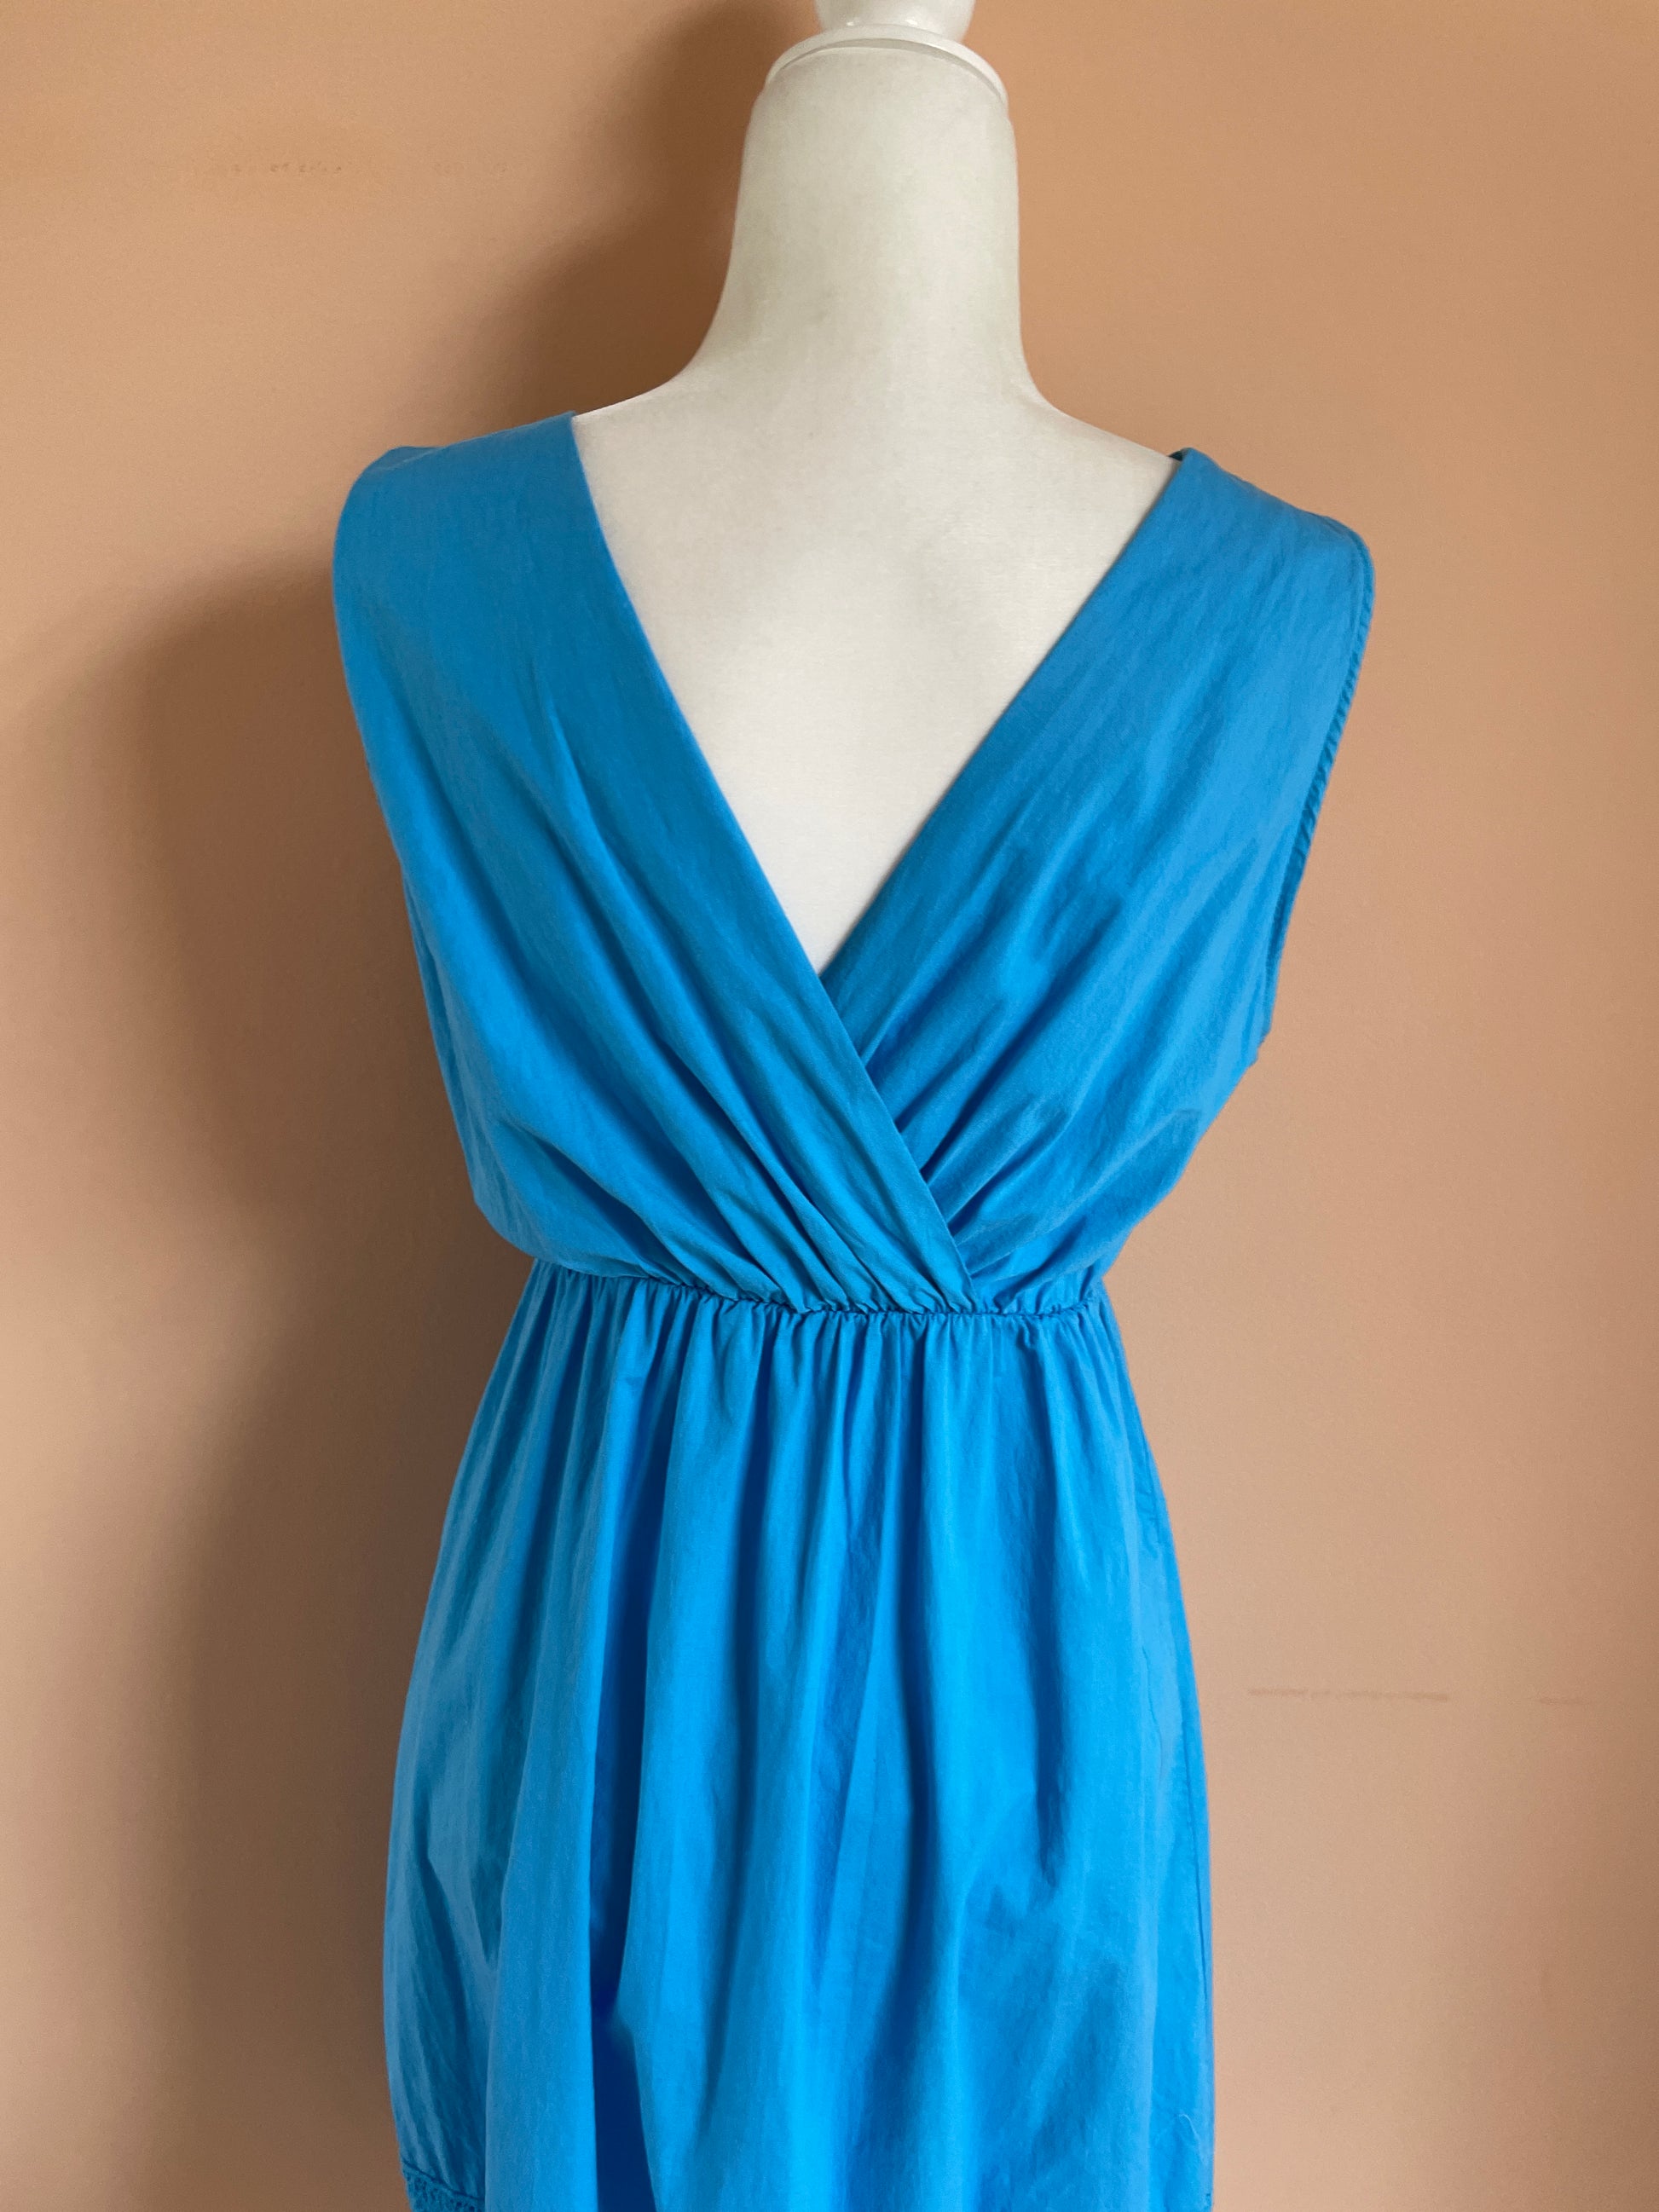  Color me Blue 2000’s Striking Cotton Sleeveless Ruffled Summer Dress. S